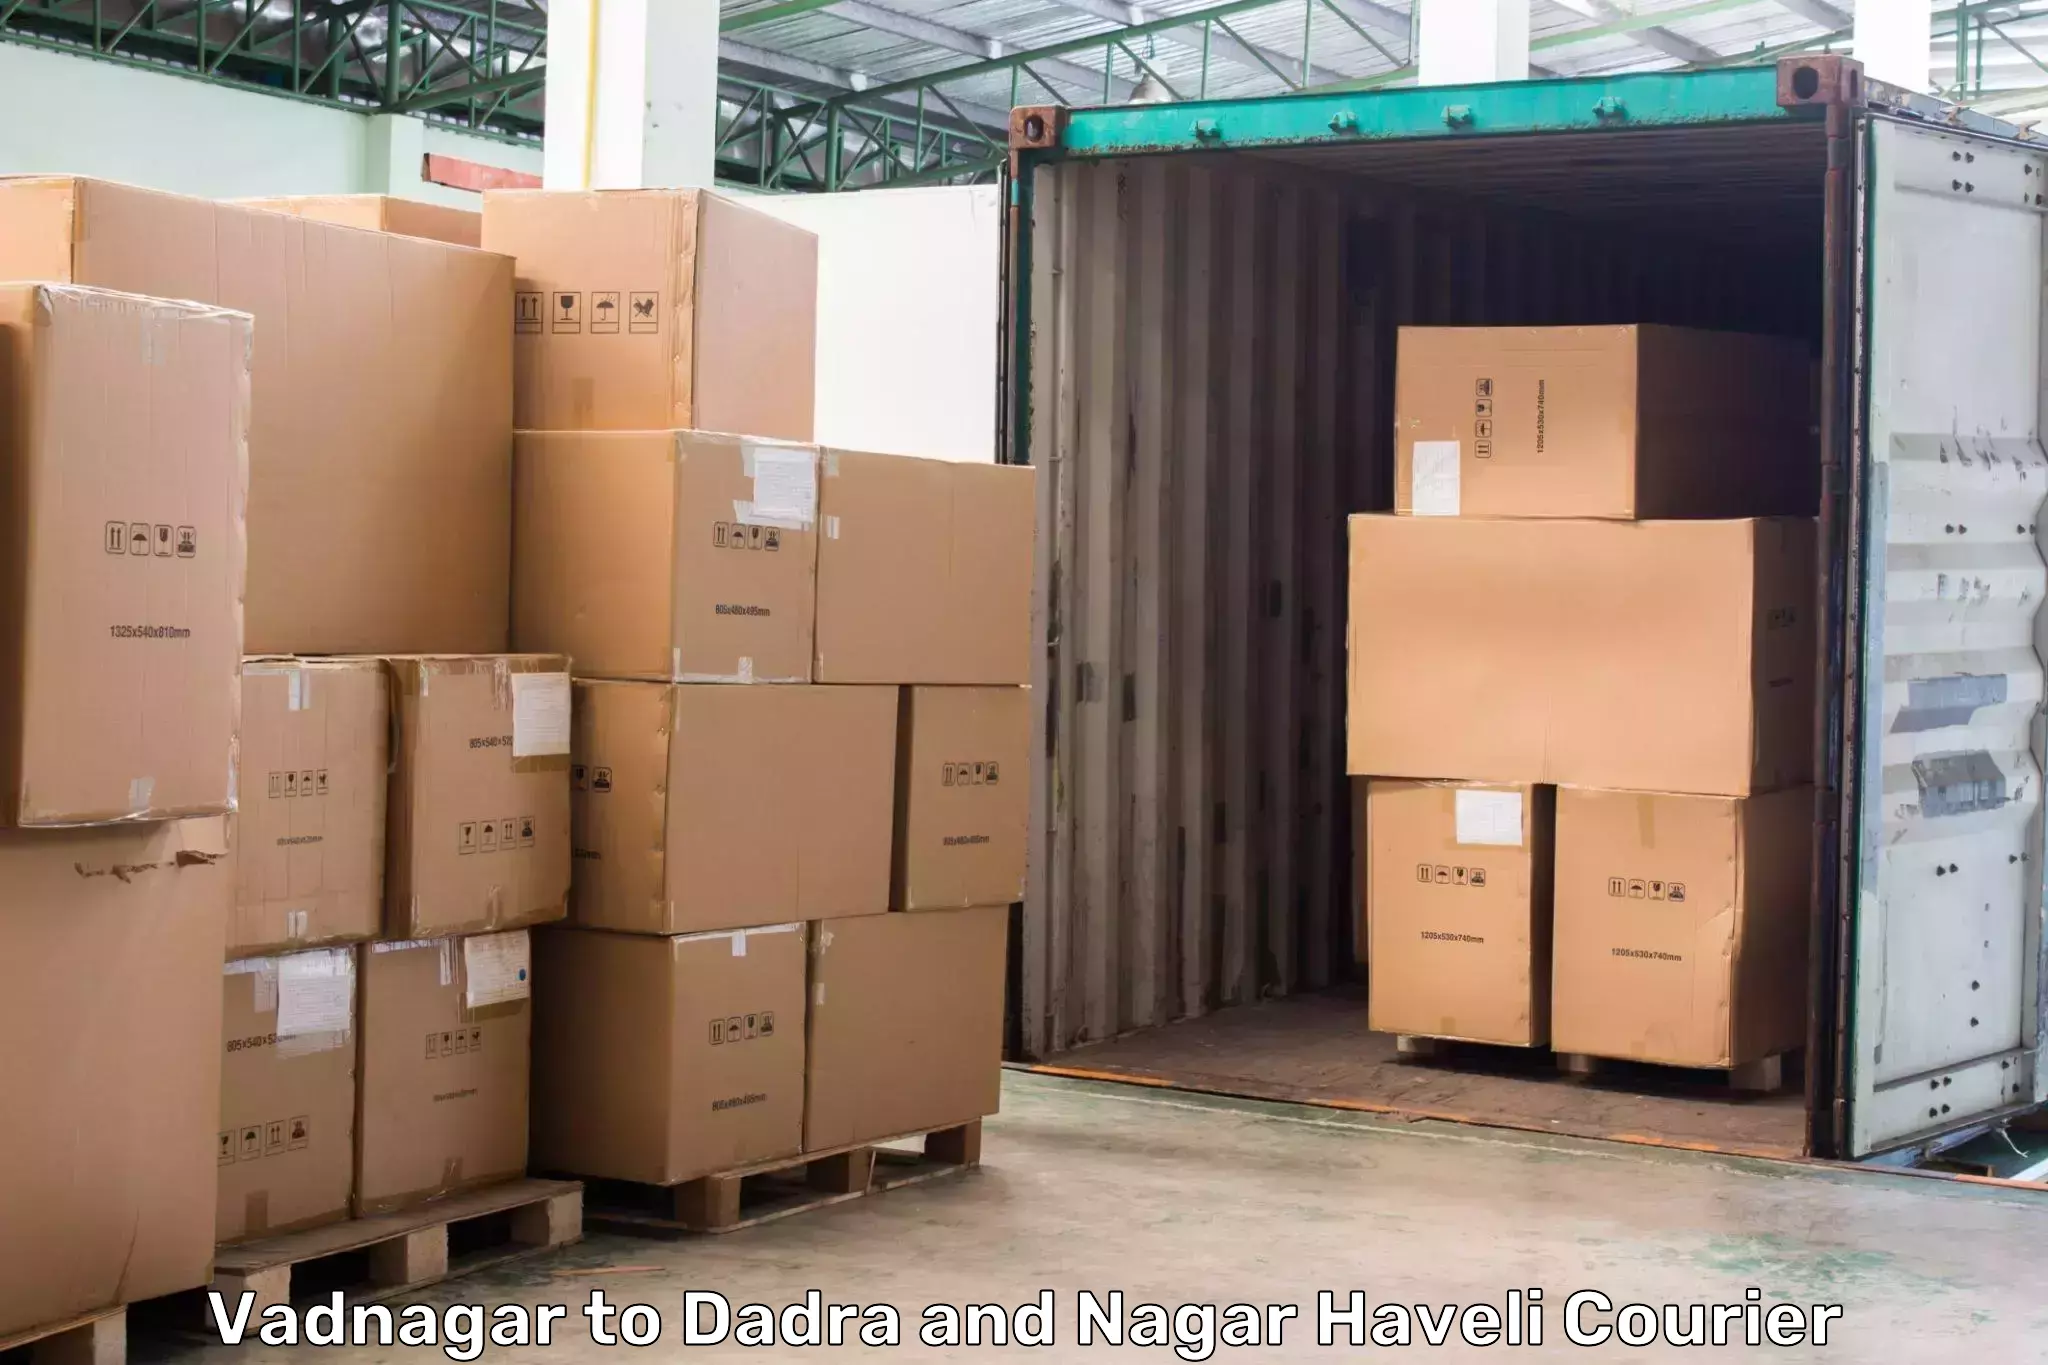 Courier service innovation in Vadnagar to Dadra and Nagar Haveli